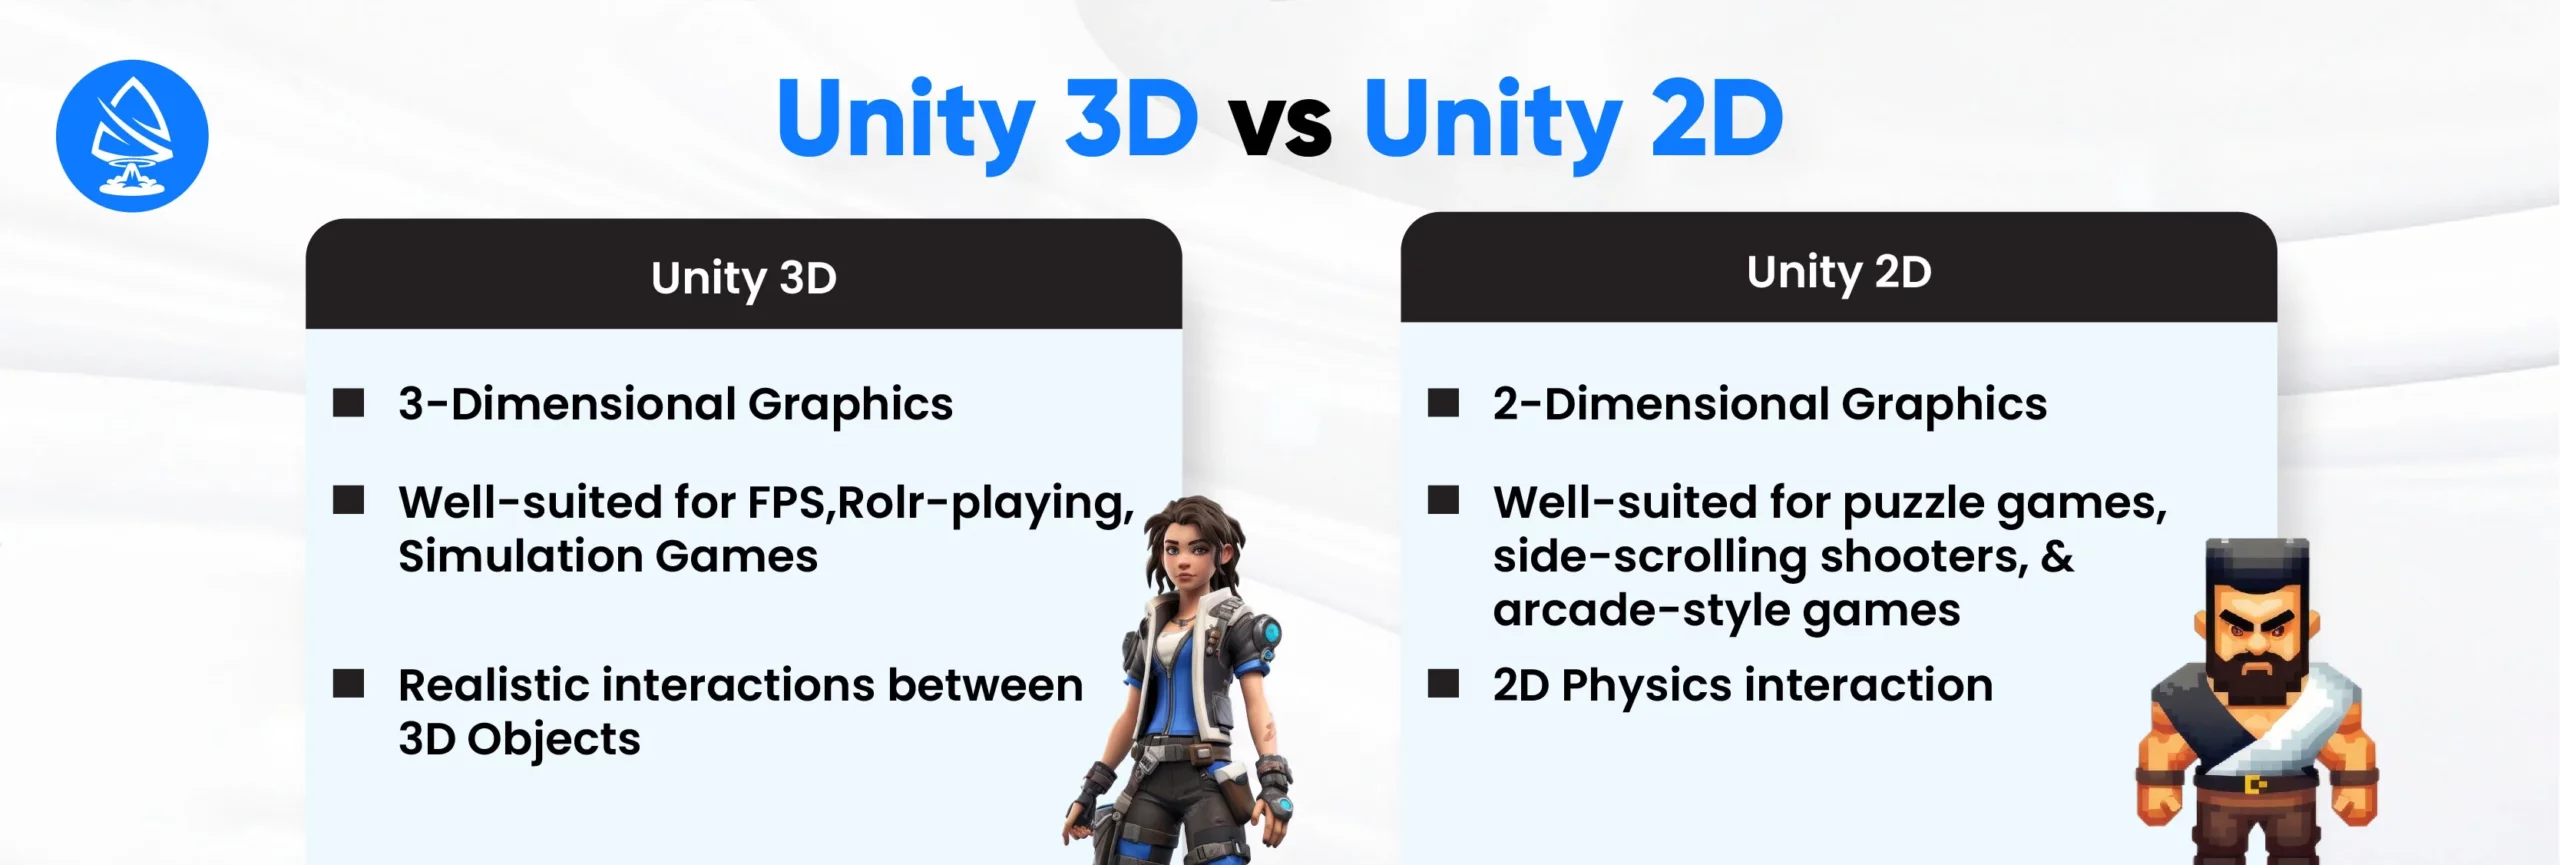 Unity 3D vs Unity 2D